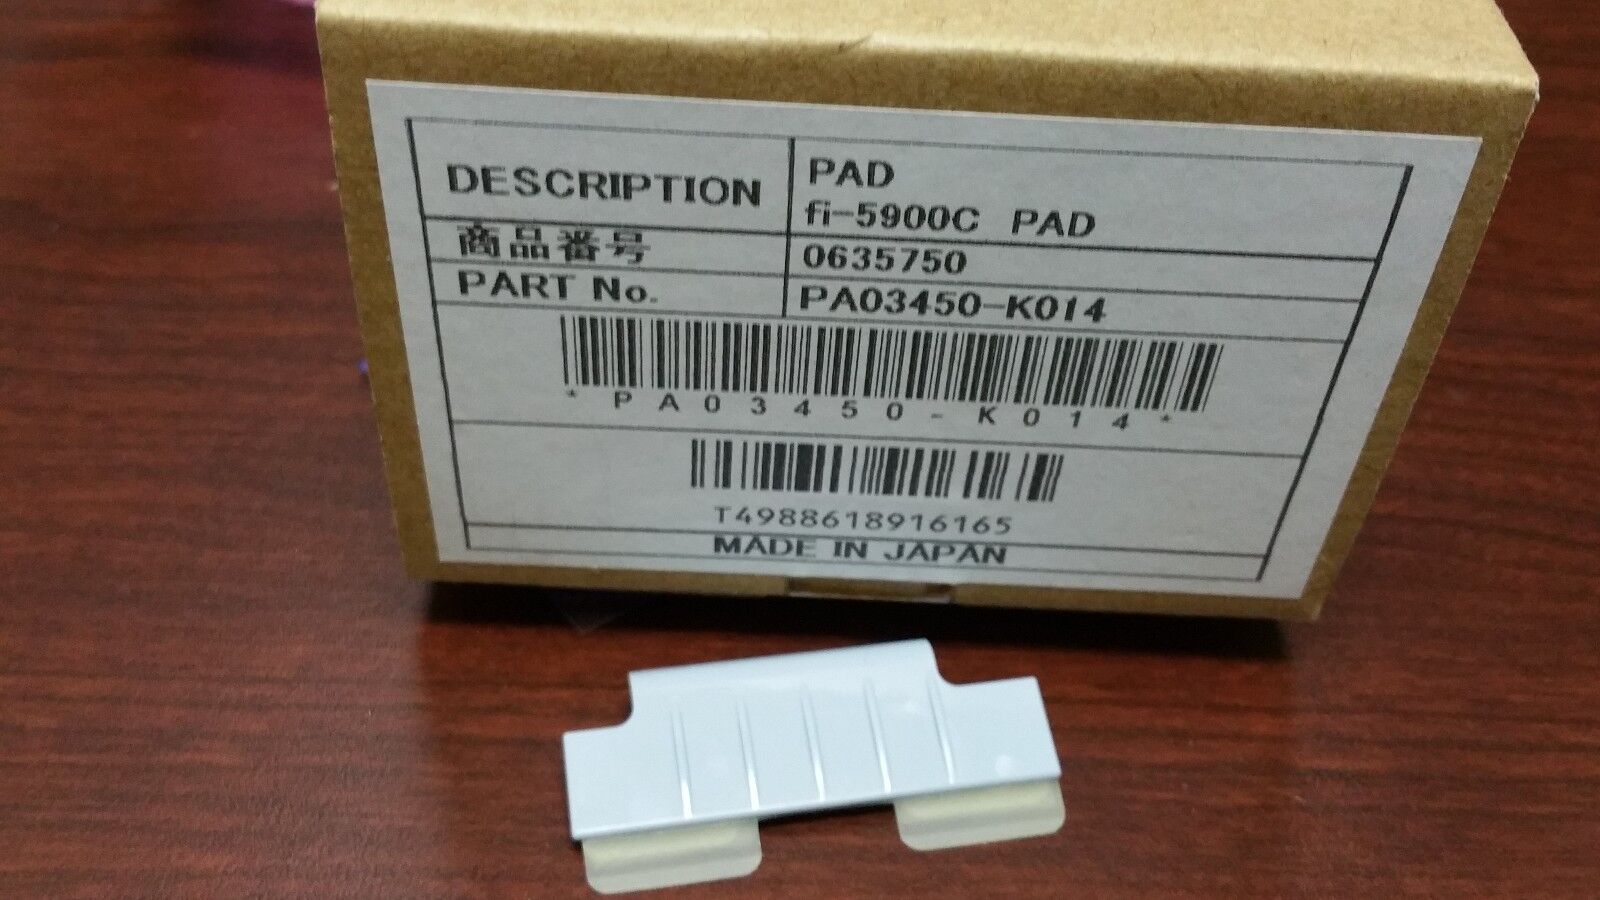 One Genuine OEM Fujitsu PA03450-K014 Pad for fi-5900C Color Scanner.